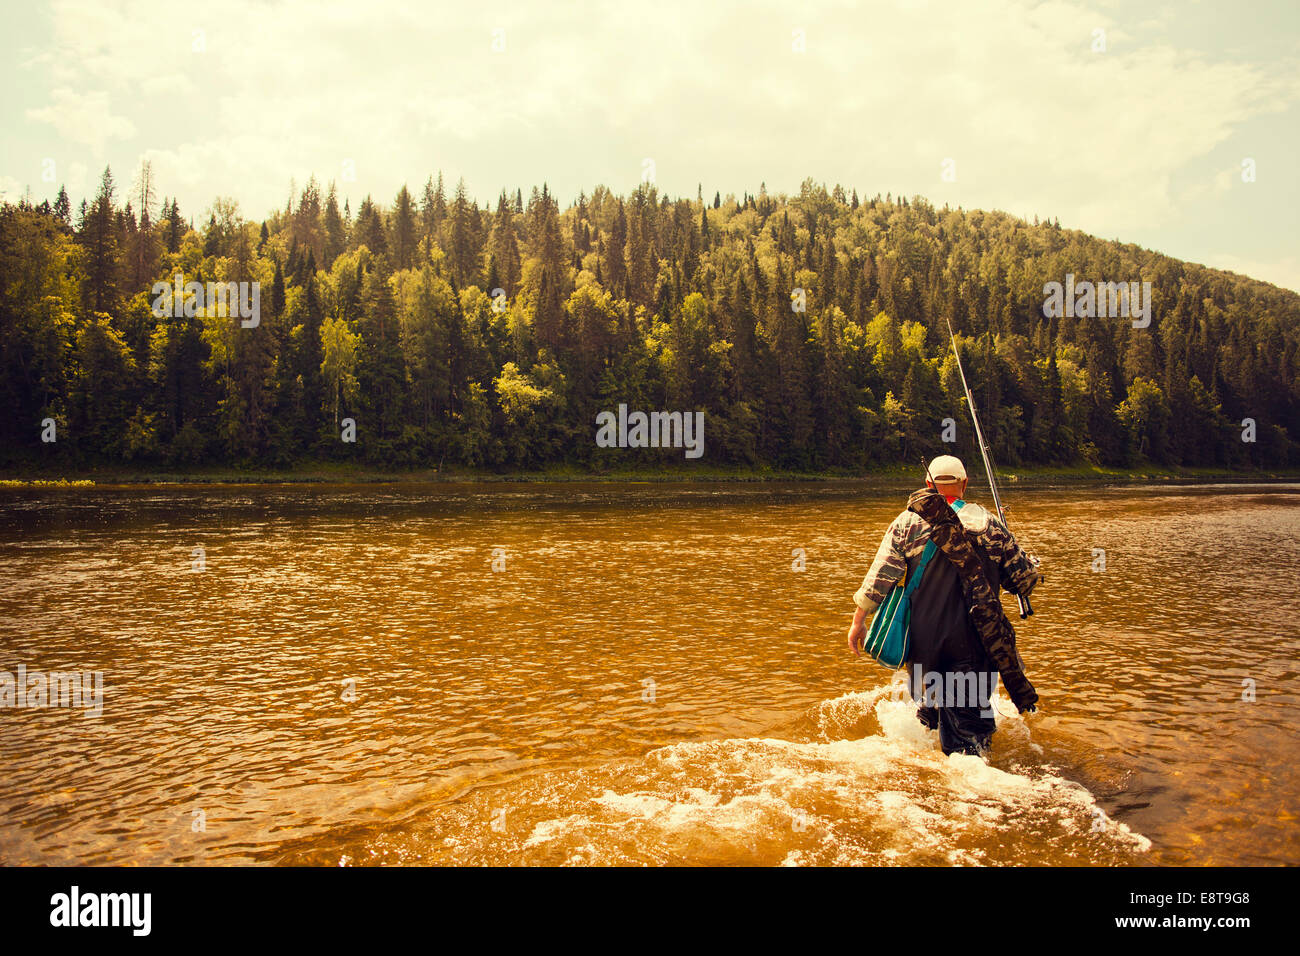 Mari fisherman carrying fishing rod in lake Stock Photo